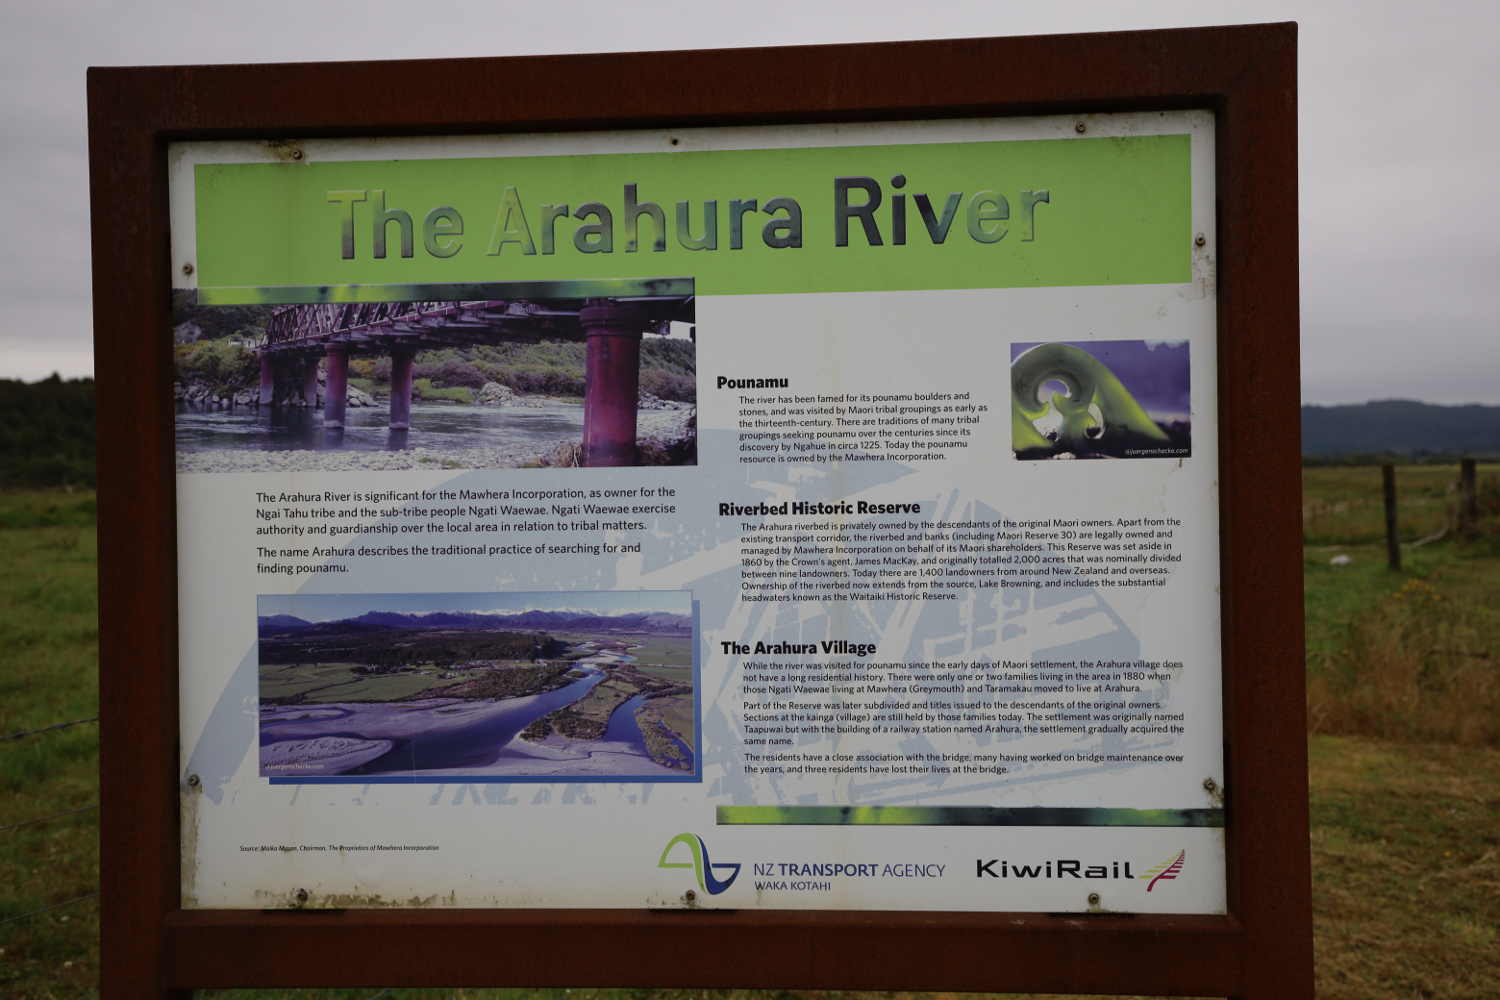 The Arahura river information plaque